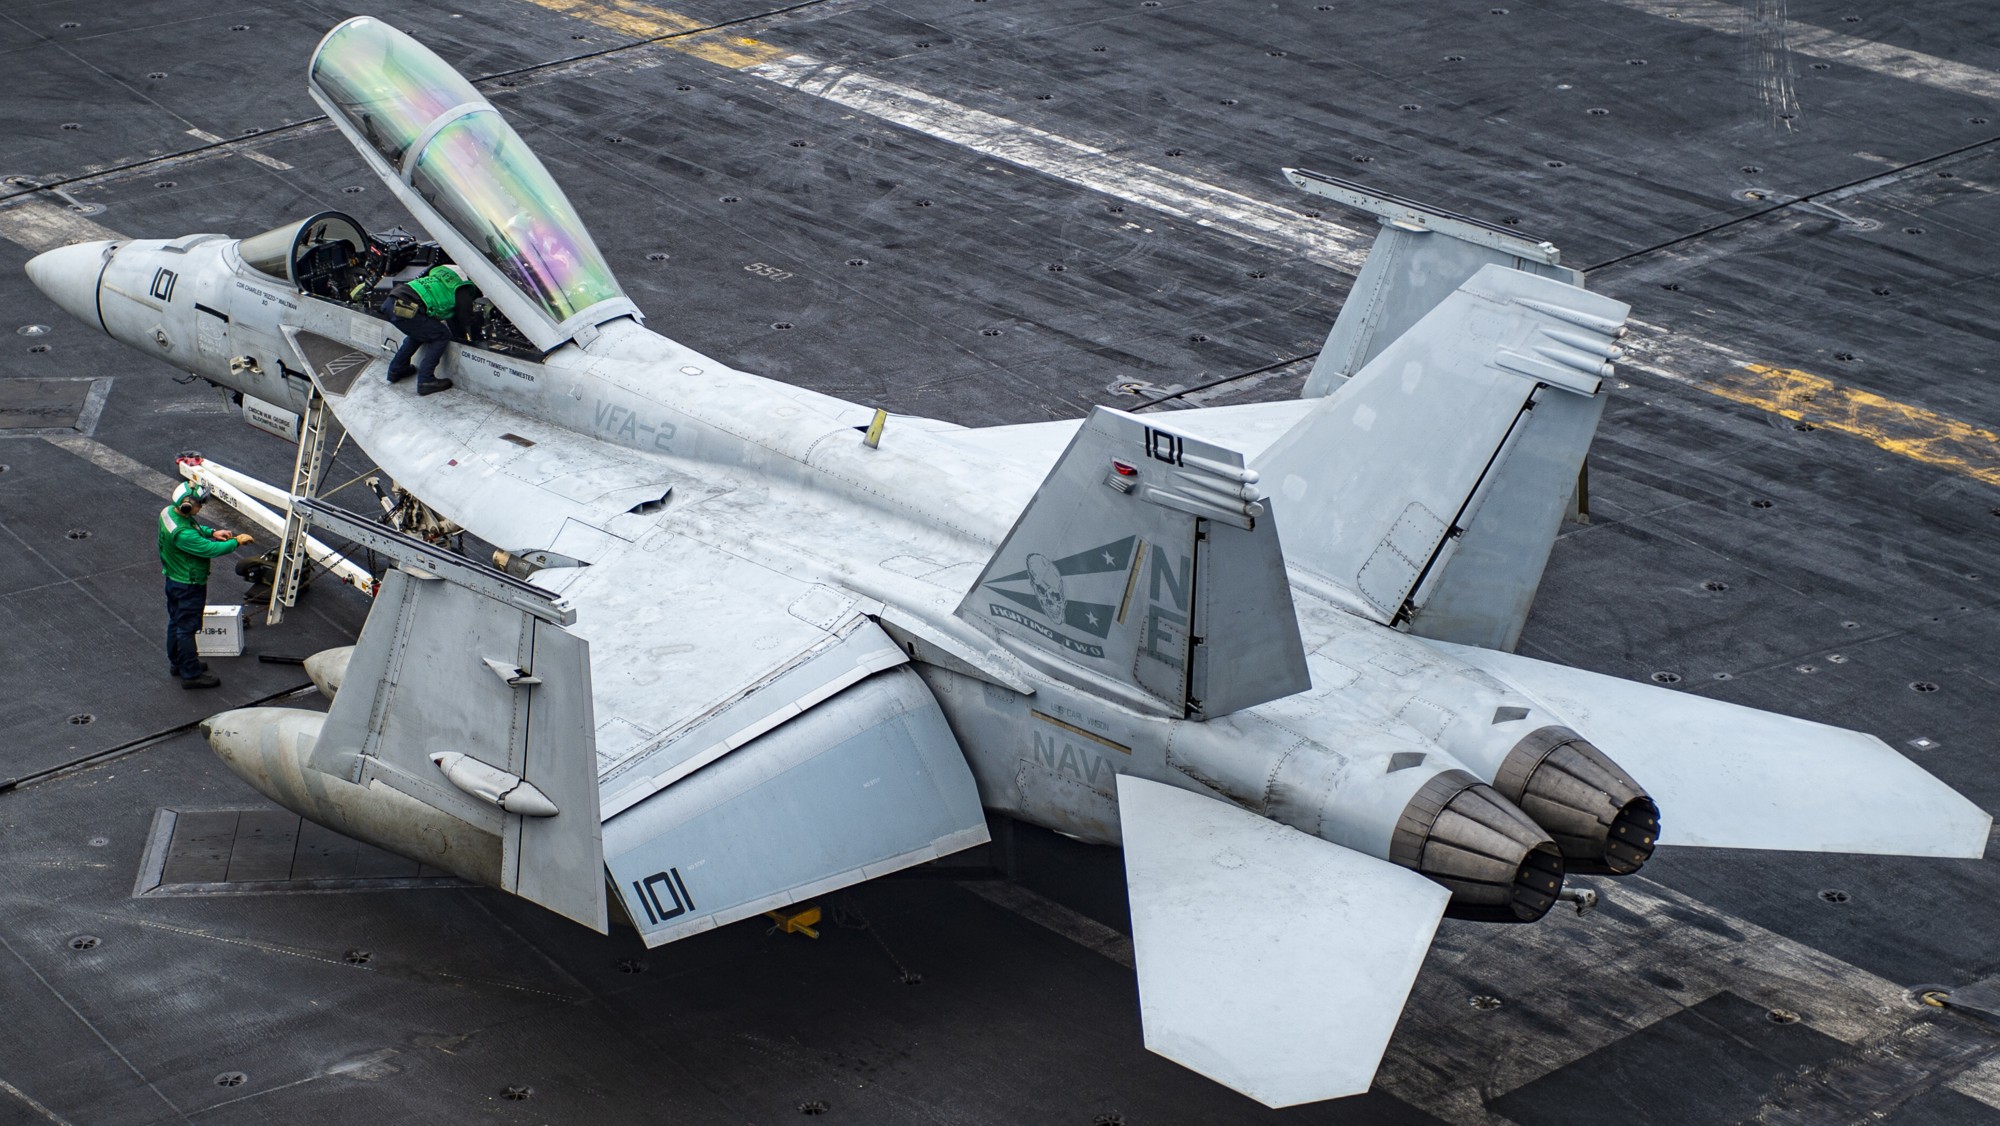 vfa-2 bounty hunters strike fighter squadron us navy f/a-18f super hornet carrier air wing cvw-2 uss carl vinson cvn-70 66